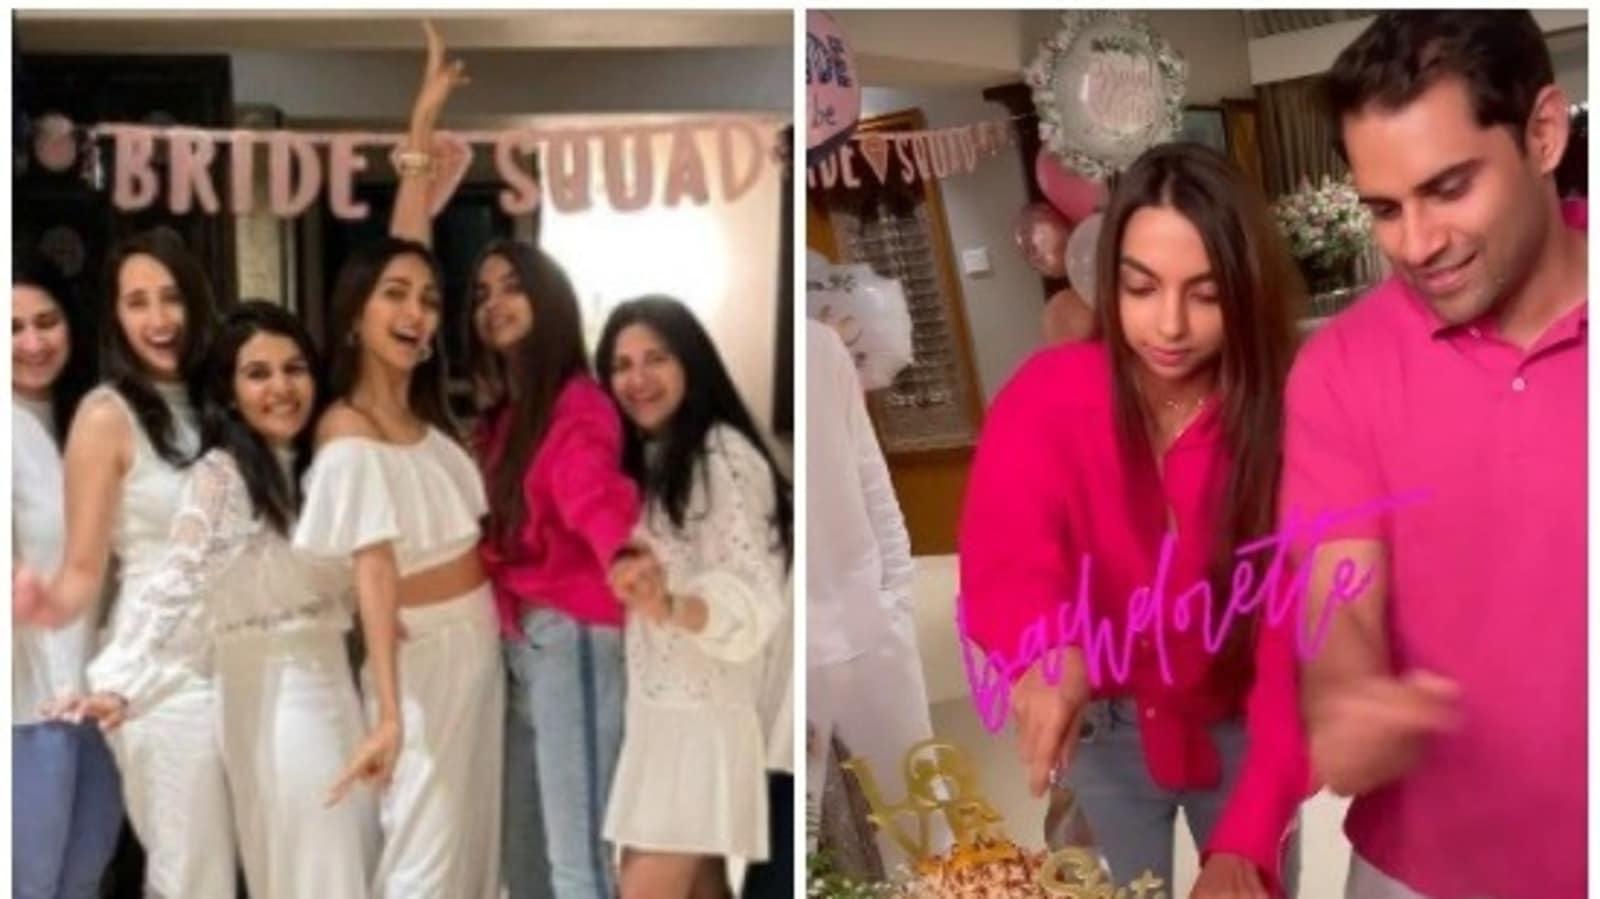 Kiara Advani joins sister Ishita Advani’s bride squad, shares photos from white and pink-themed bachelorette